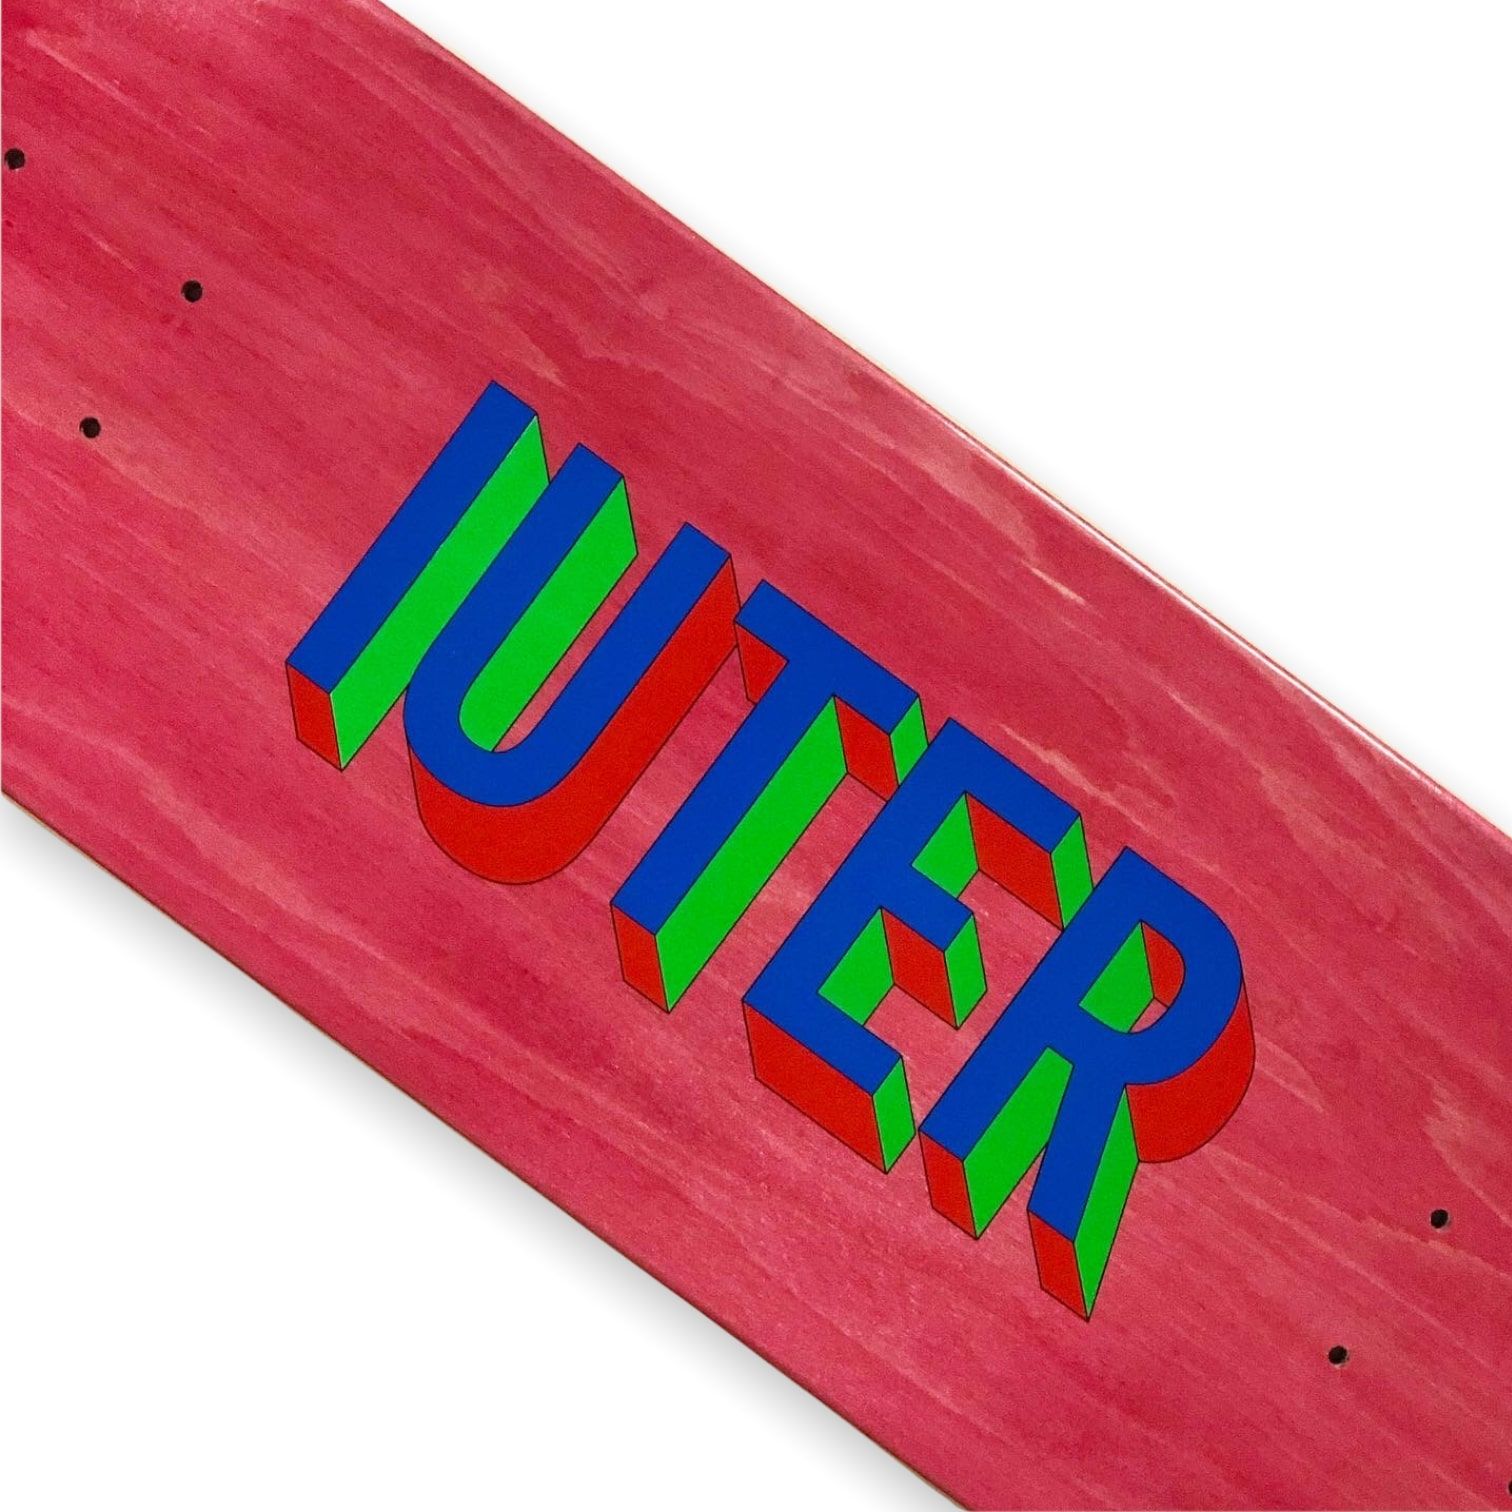 Iuter Say Something Skate Deck